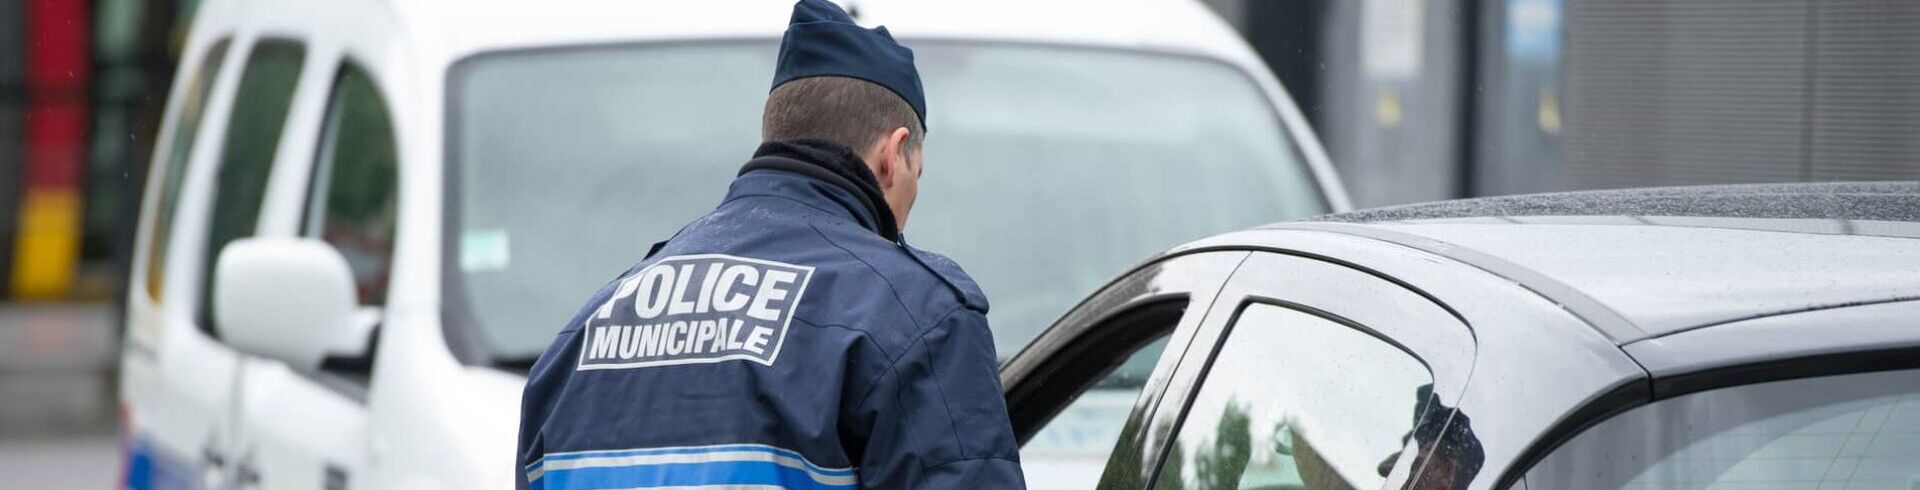 police municipale de Paris 